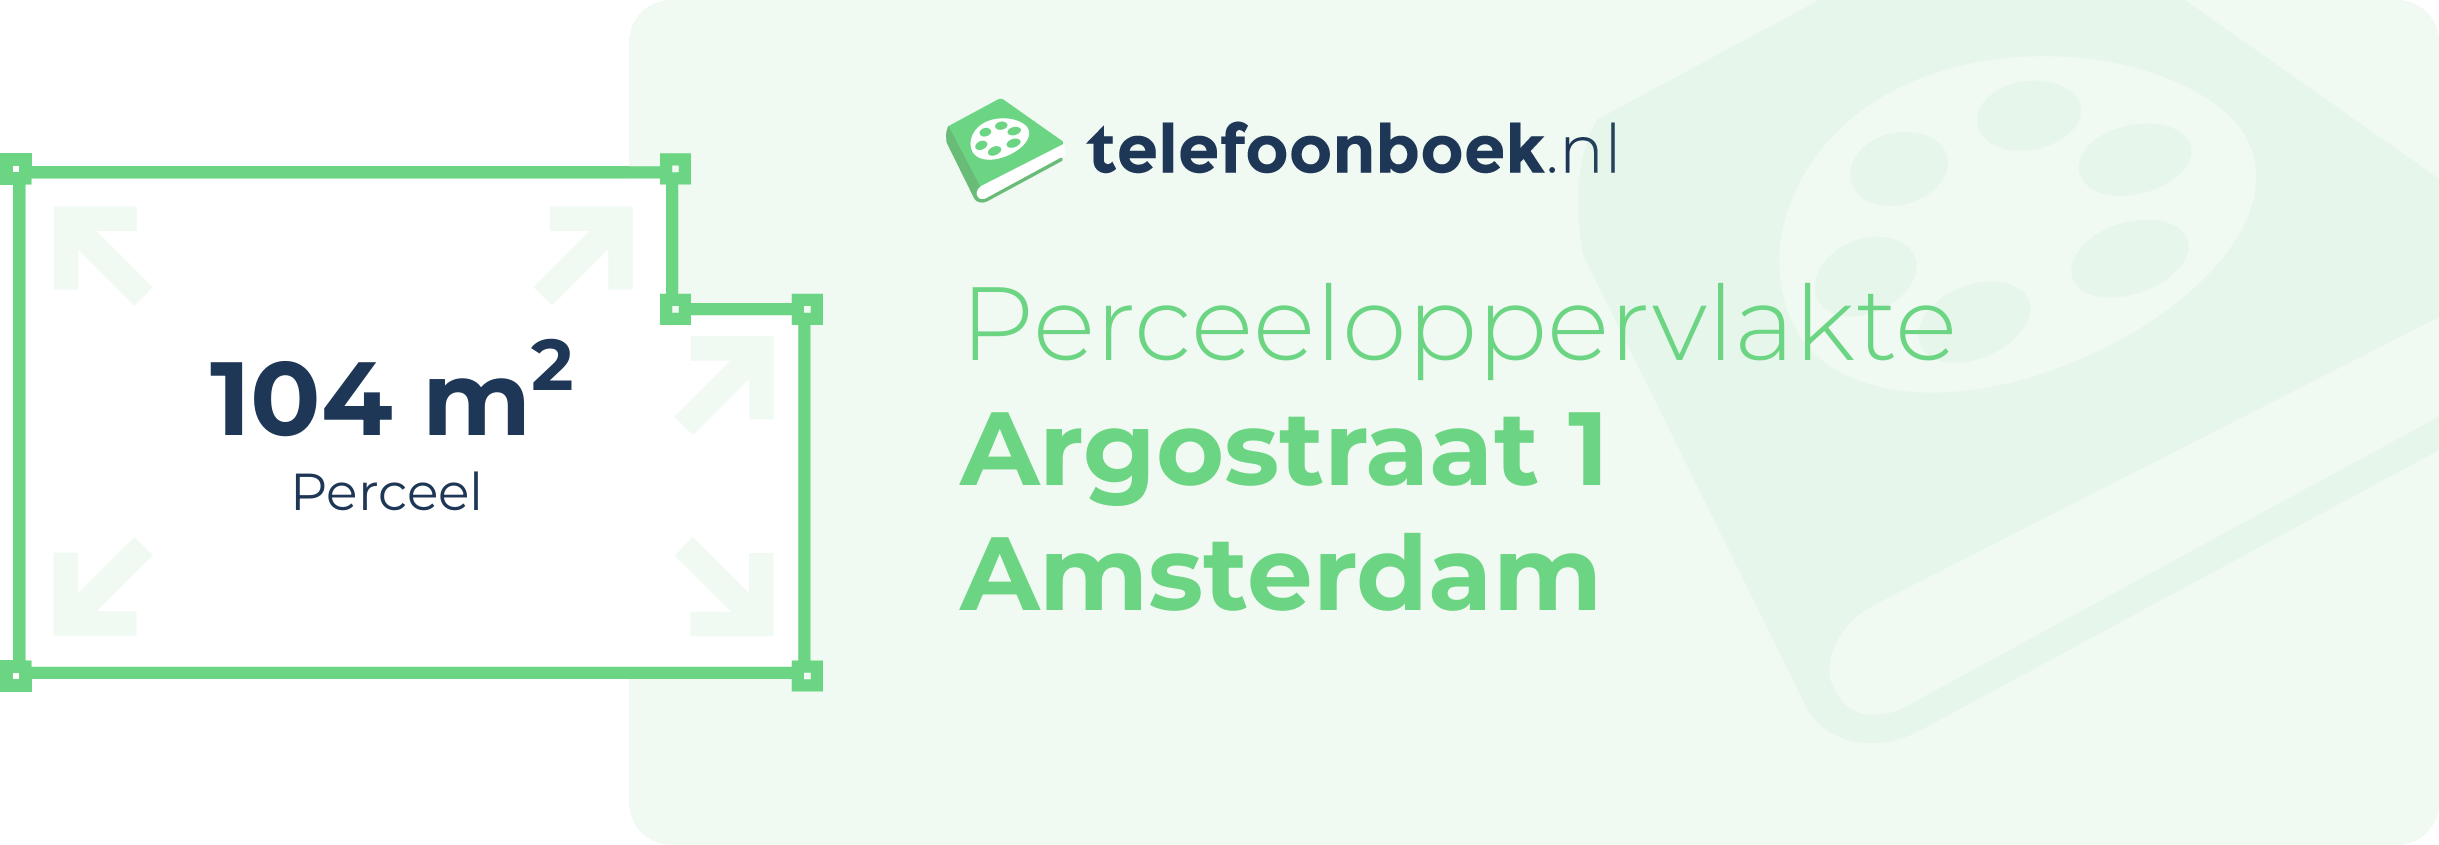 Perceeloppervlakte Argostraat 1 Amsterdam